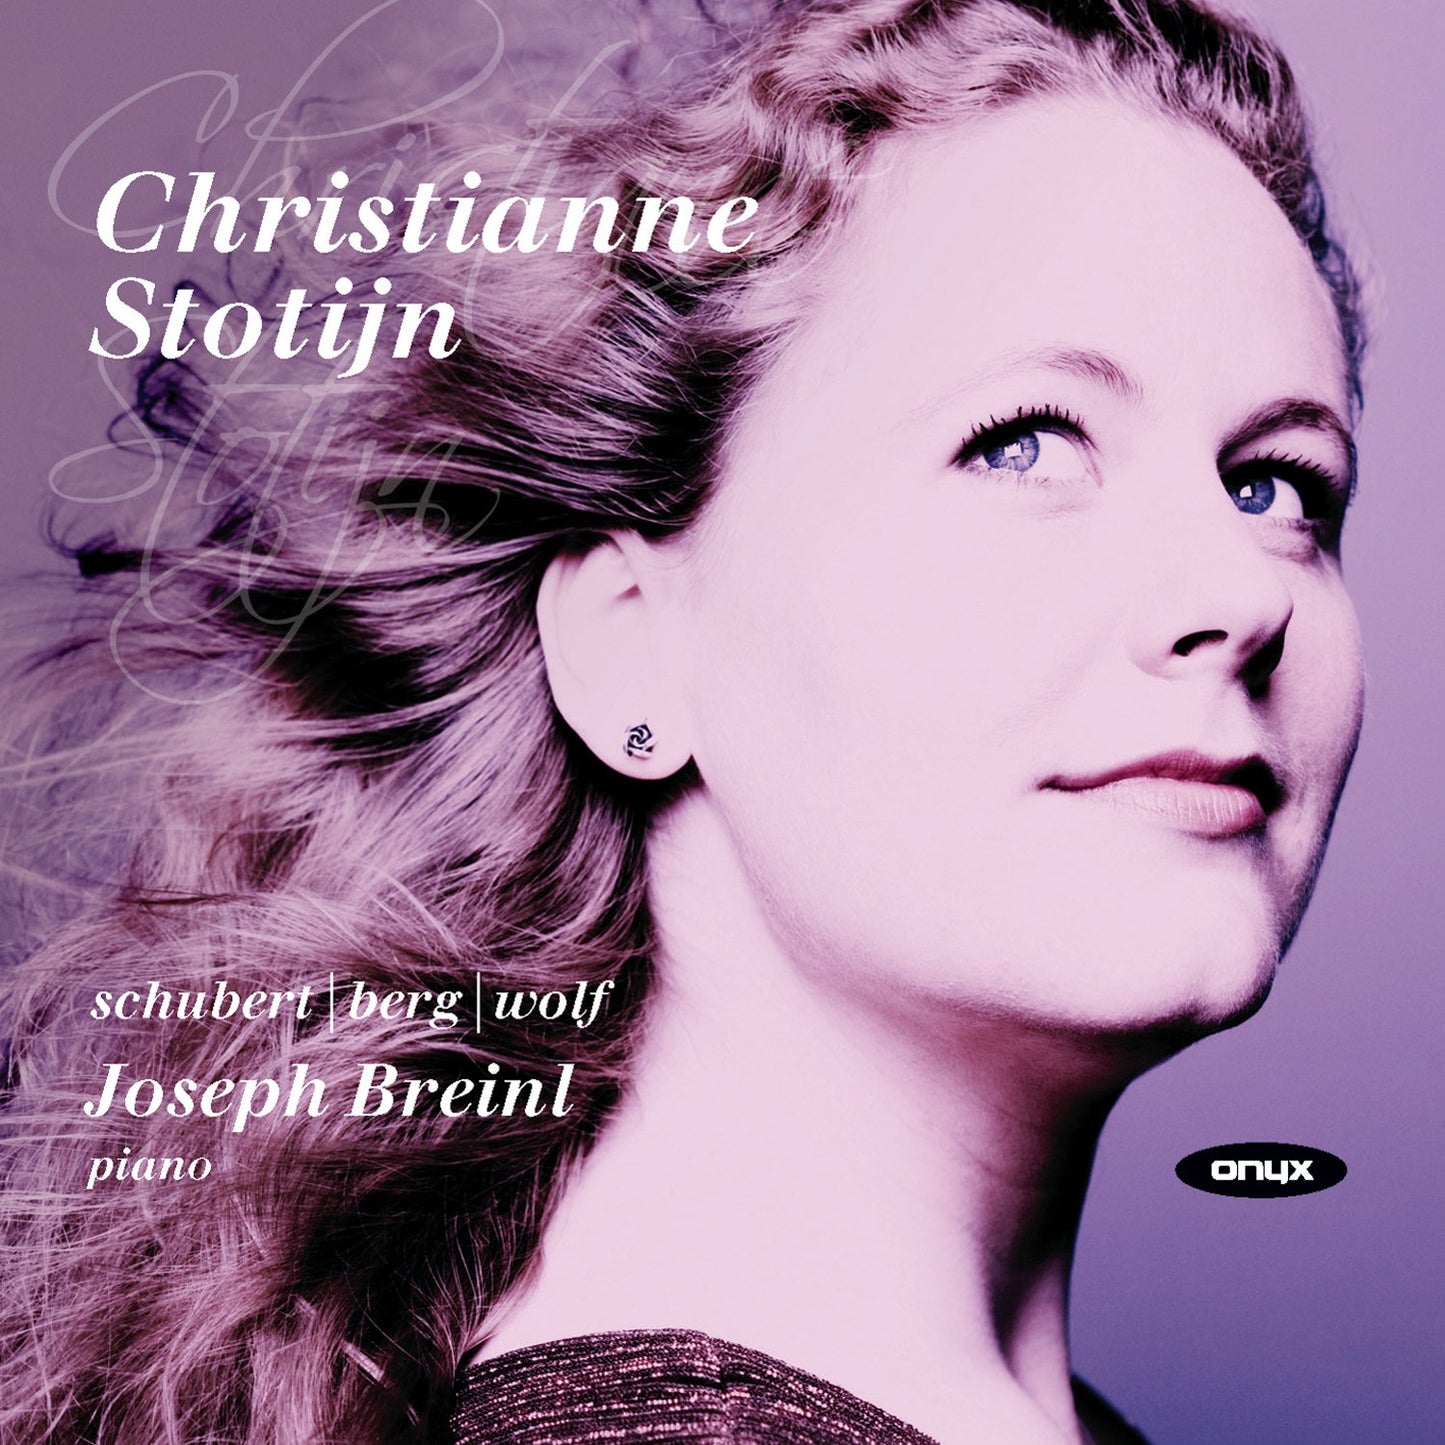 Schubert, Berg, Wolf: Lieder - Christiane Stotijn; Joseph Breinl